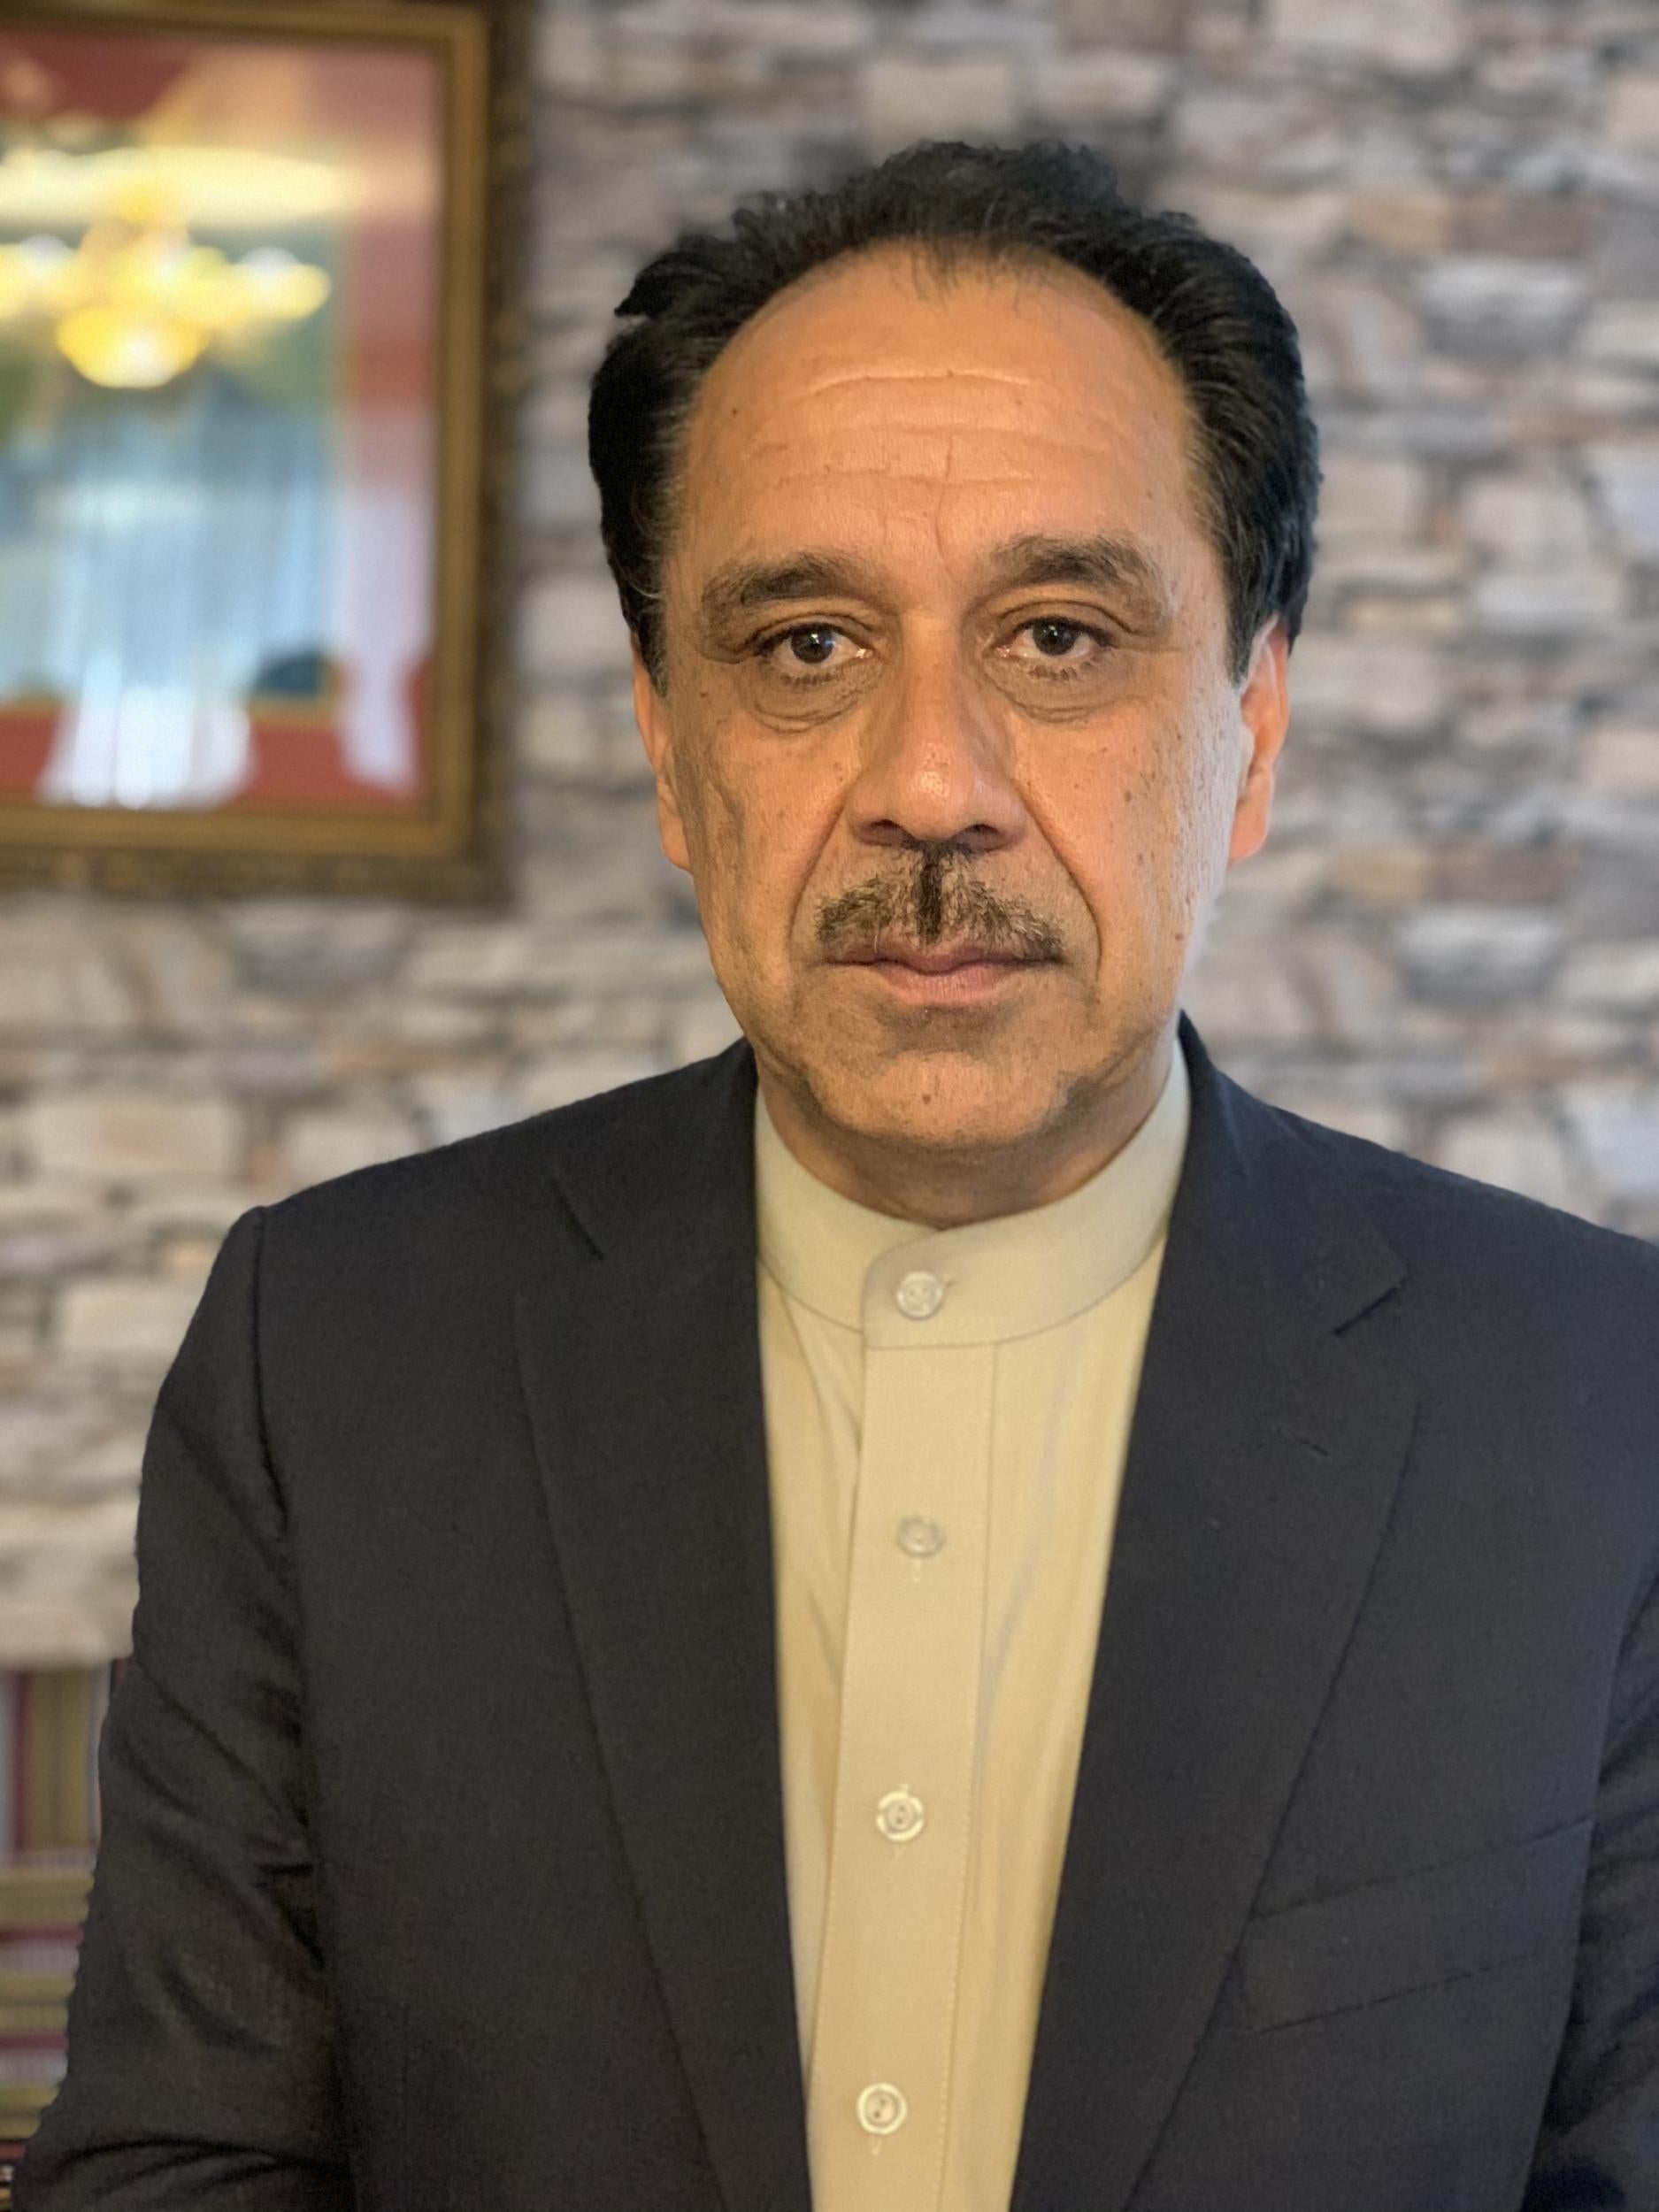 Ahmad Wali Massoud is warning of outsider meddling